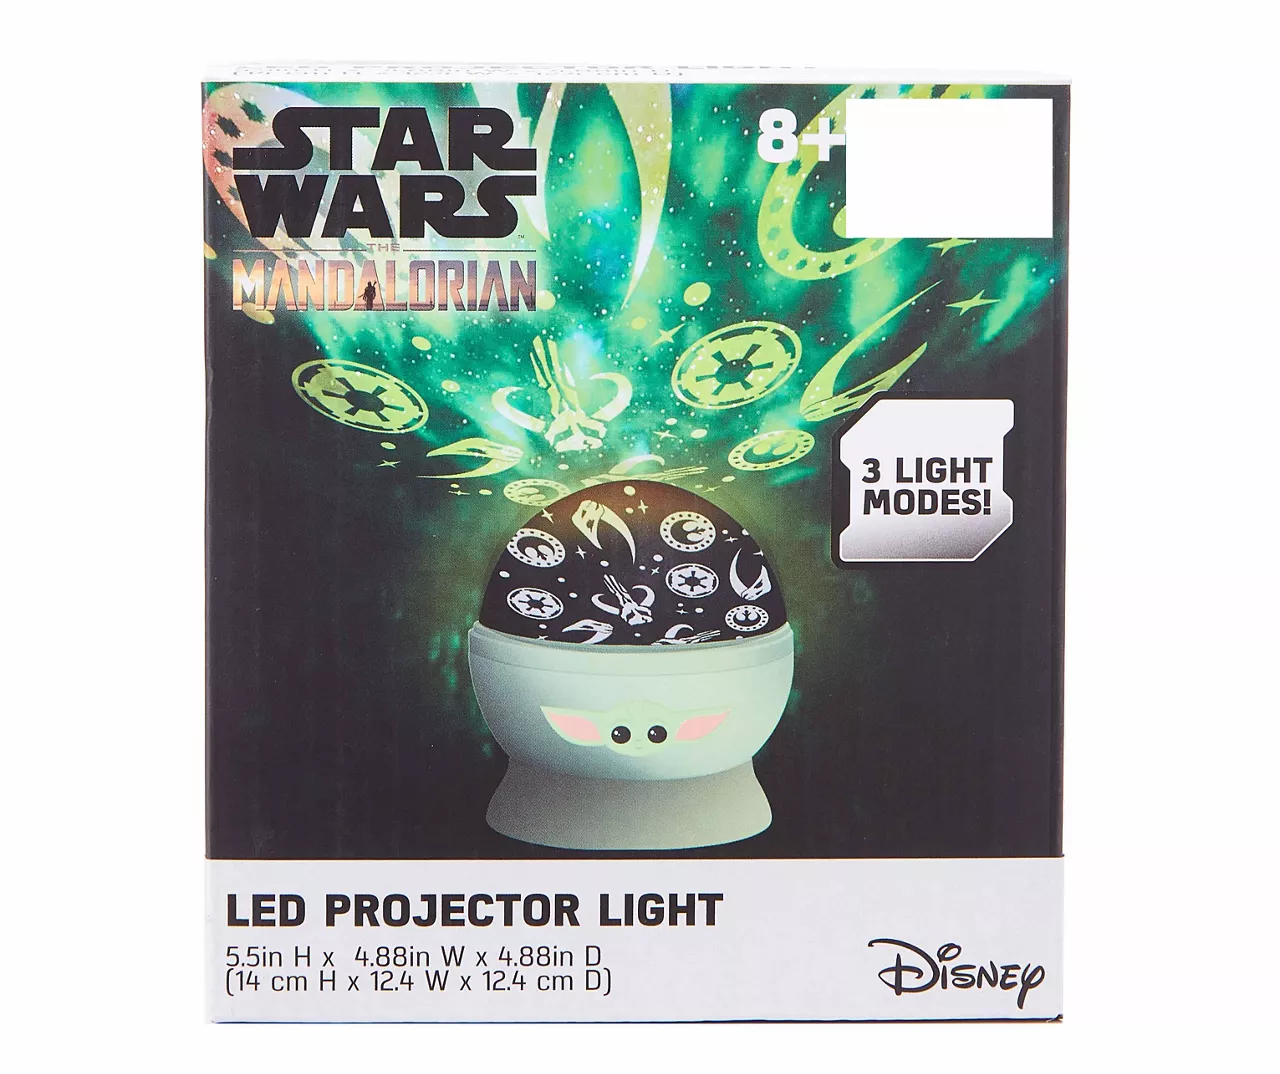 NEW Star Wars Mandalorian Grogu Baby Yoda LED Projector Light Lamp 5.5" 3 modes - $18.95